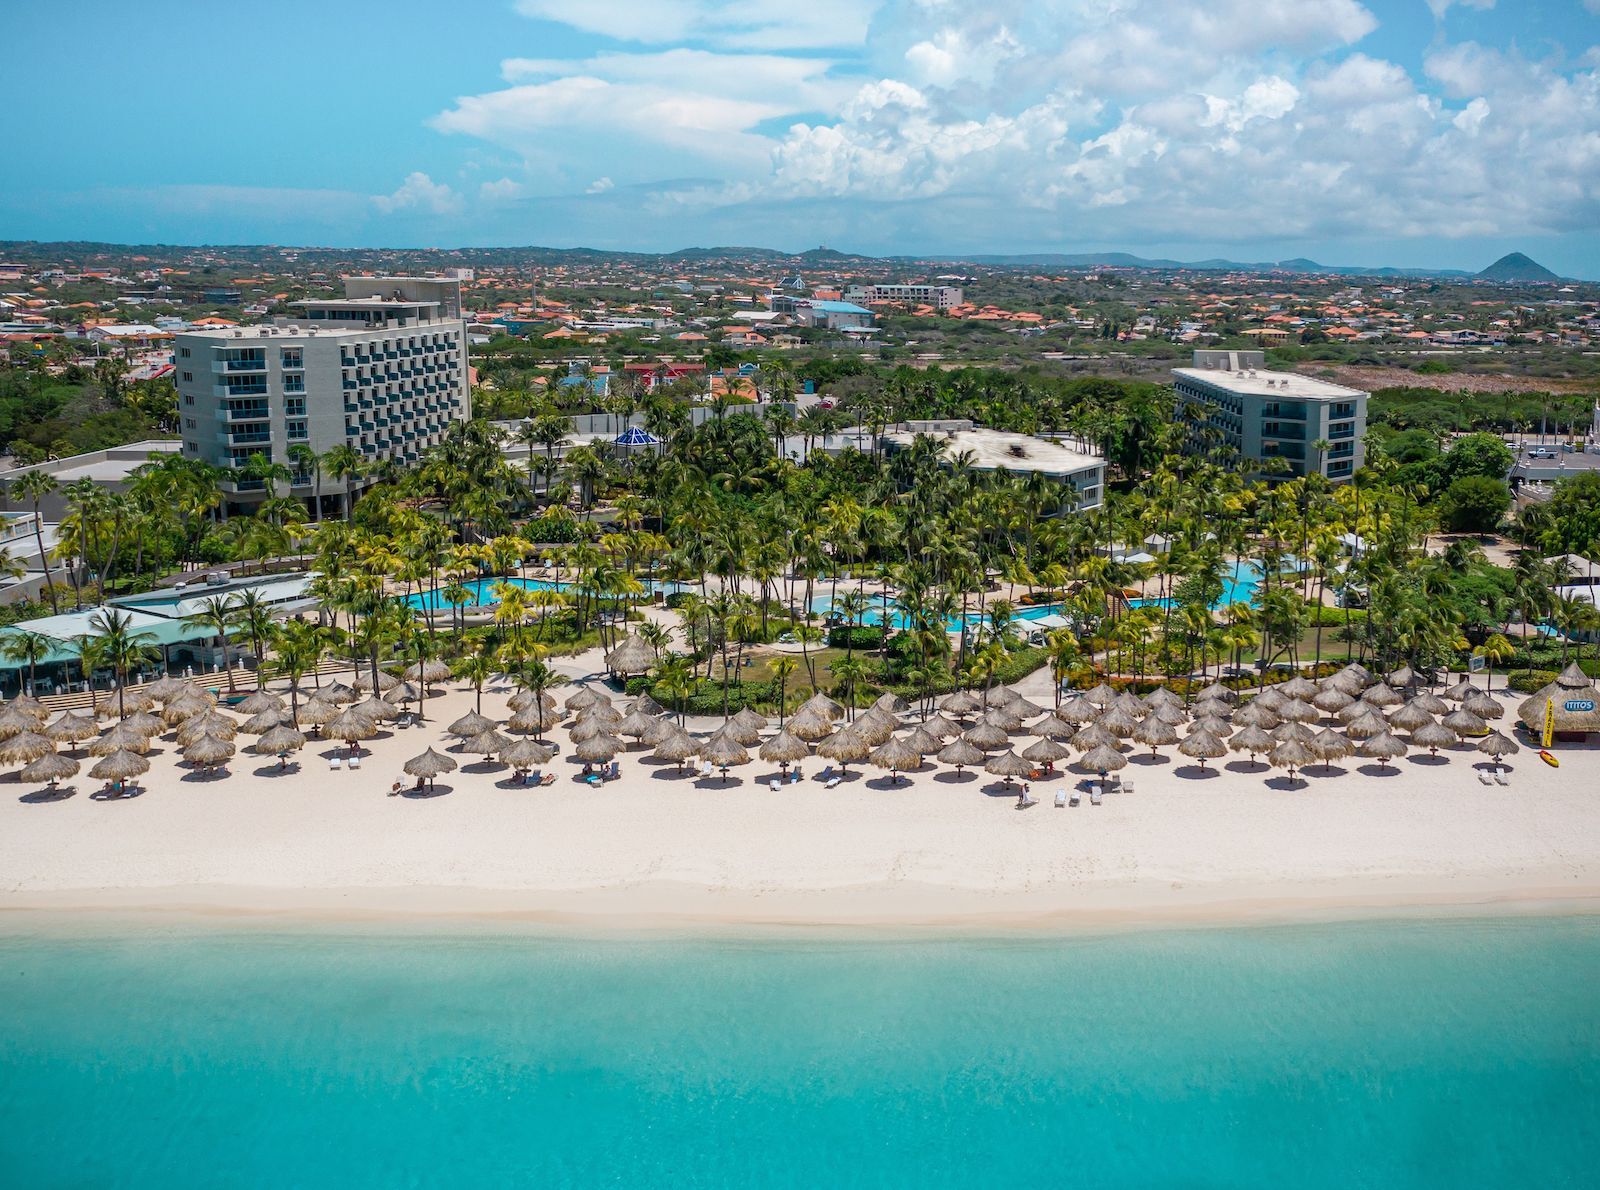 Hilton Aruba Caribbean Resort and Casino- hilton aruba beach from air shot